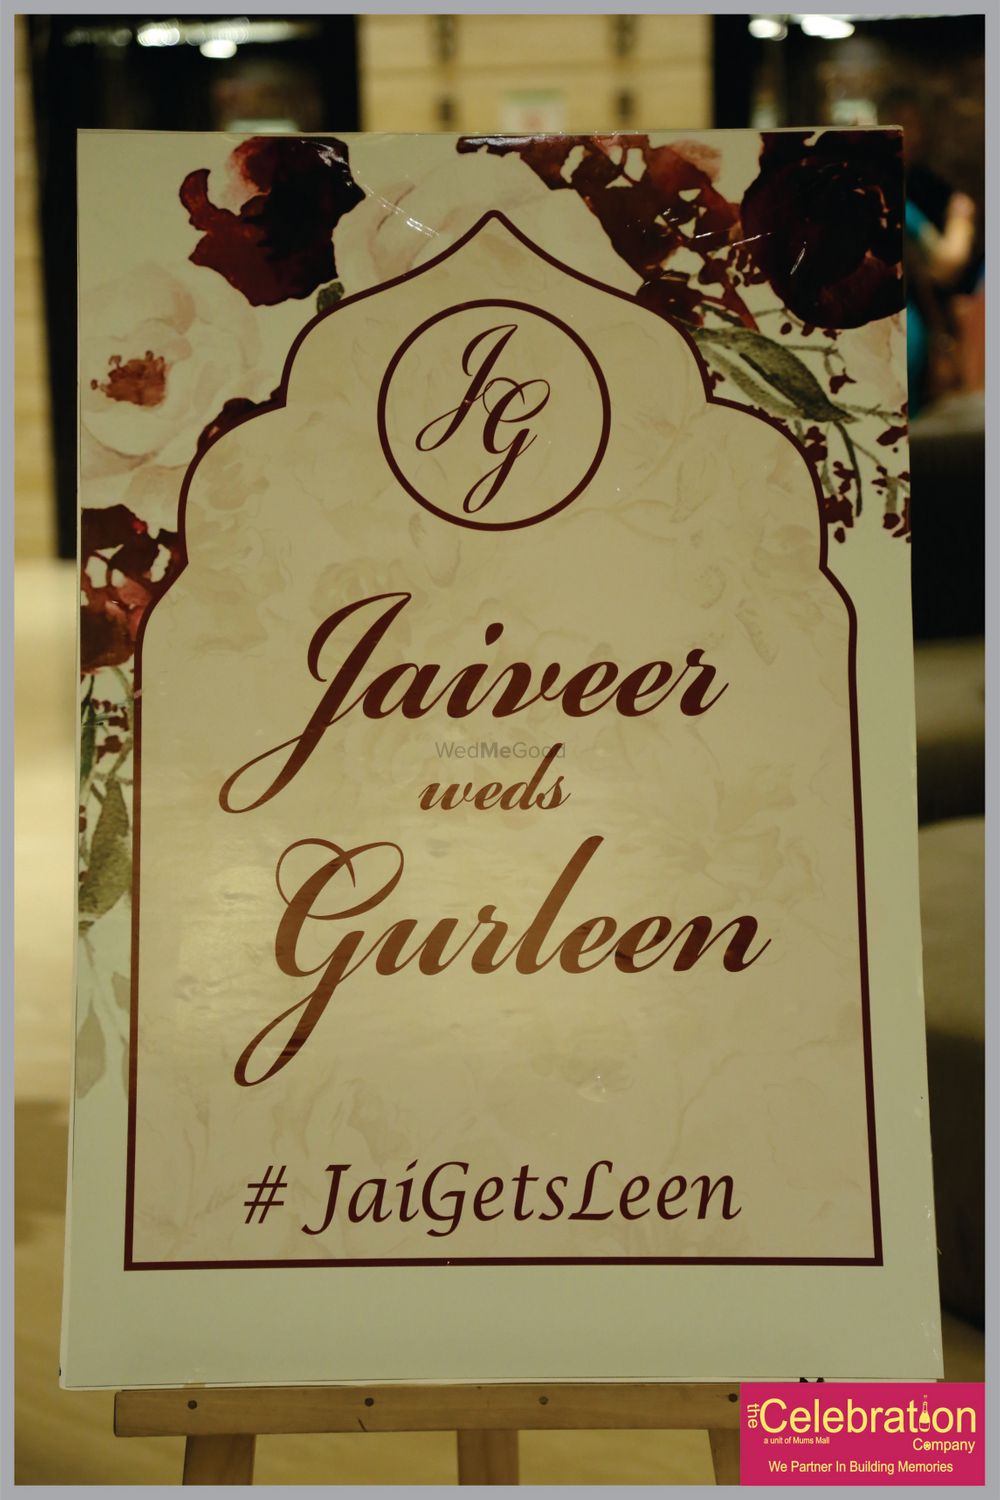 Photo From #JaiGetsLeen - By The Celebration Company